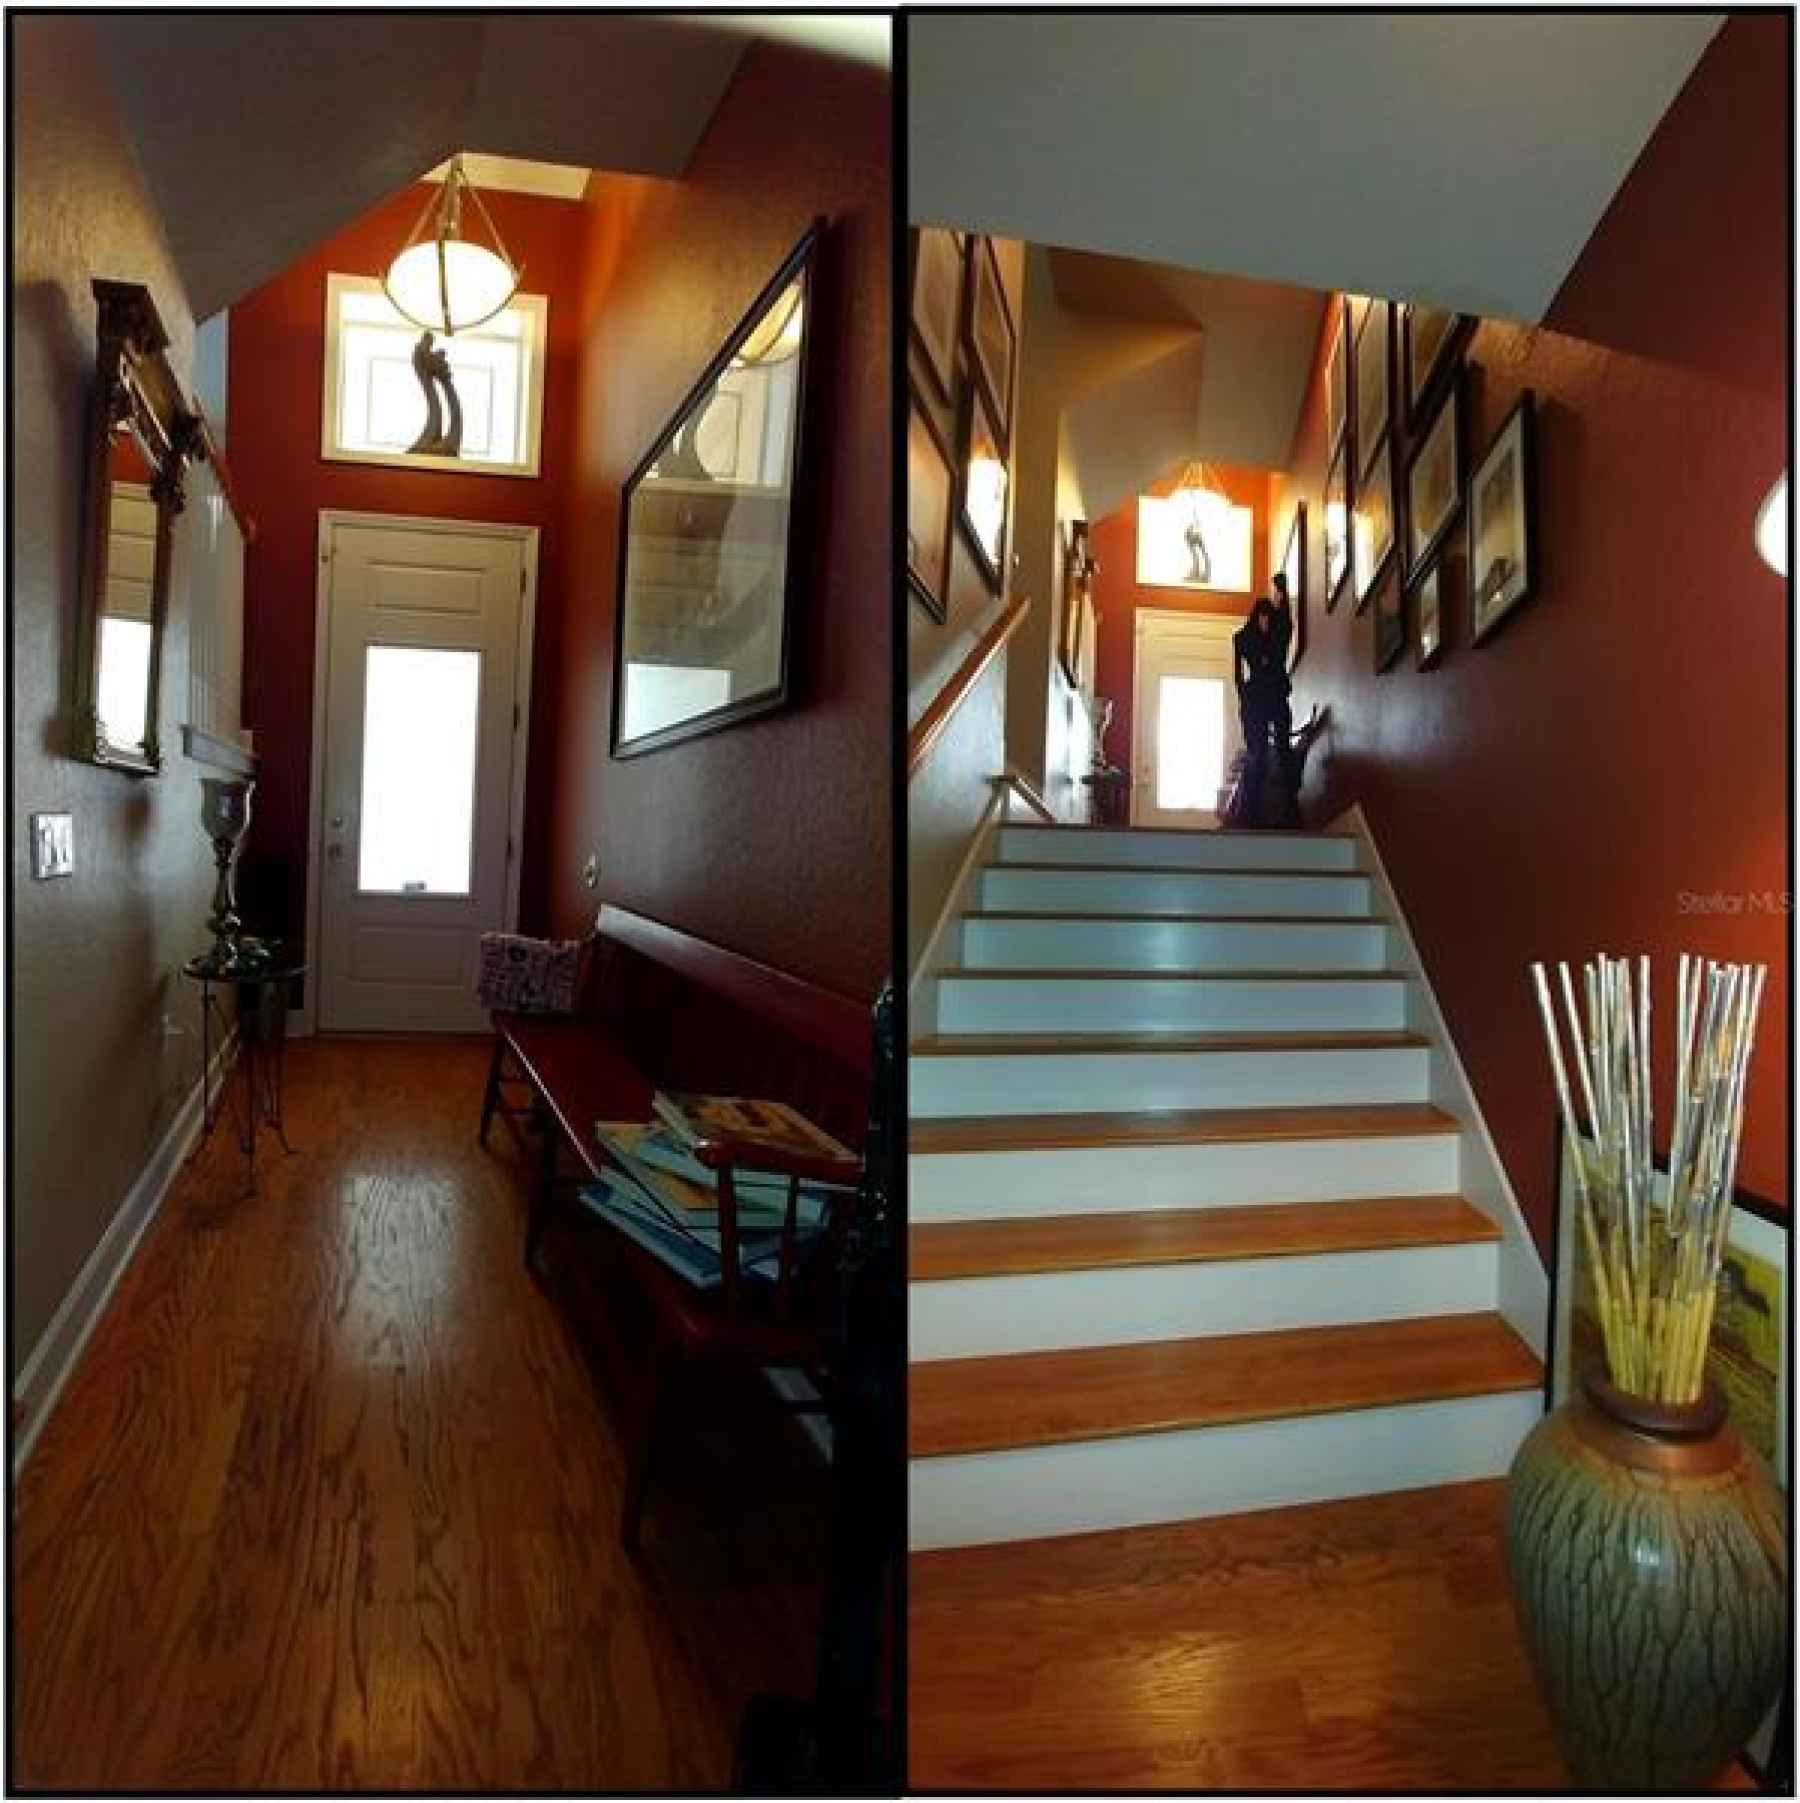 Elegant entry, foyer, and stairs to lower level bonus room